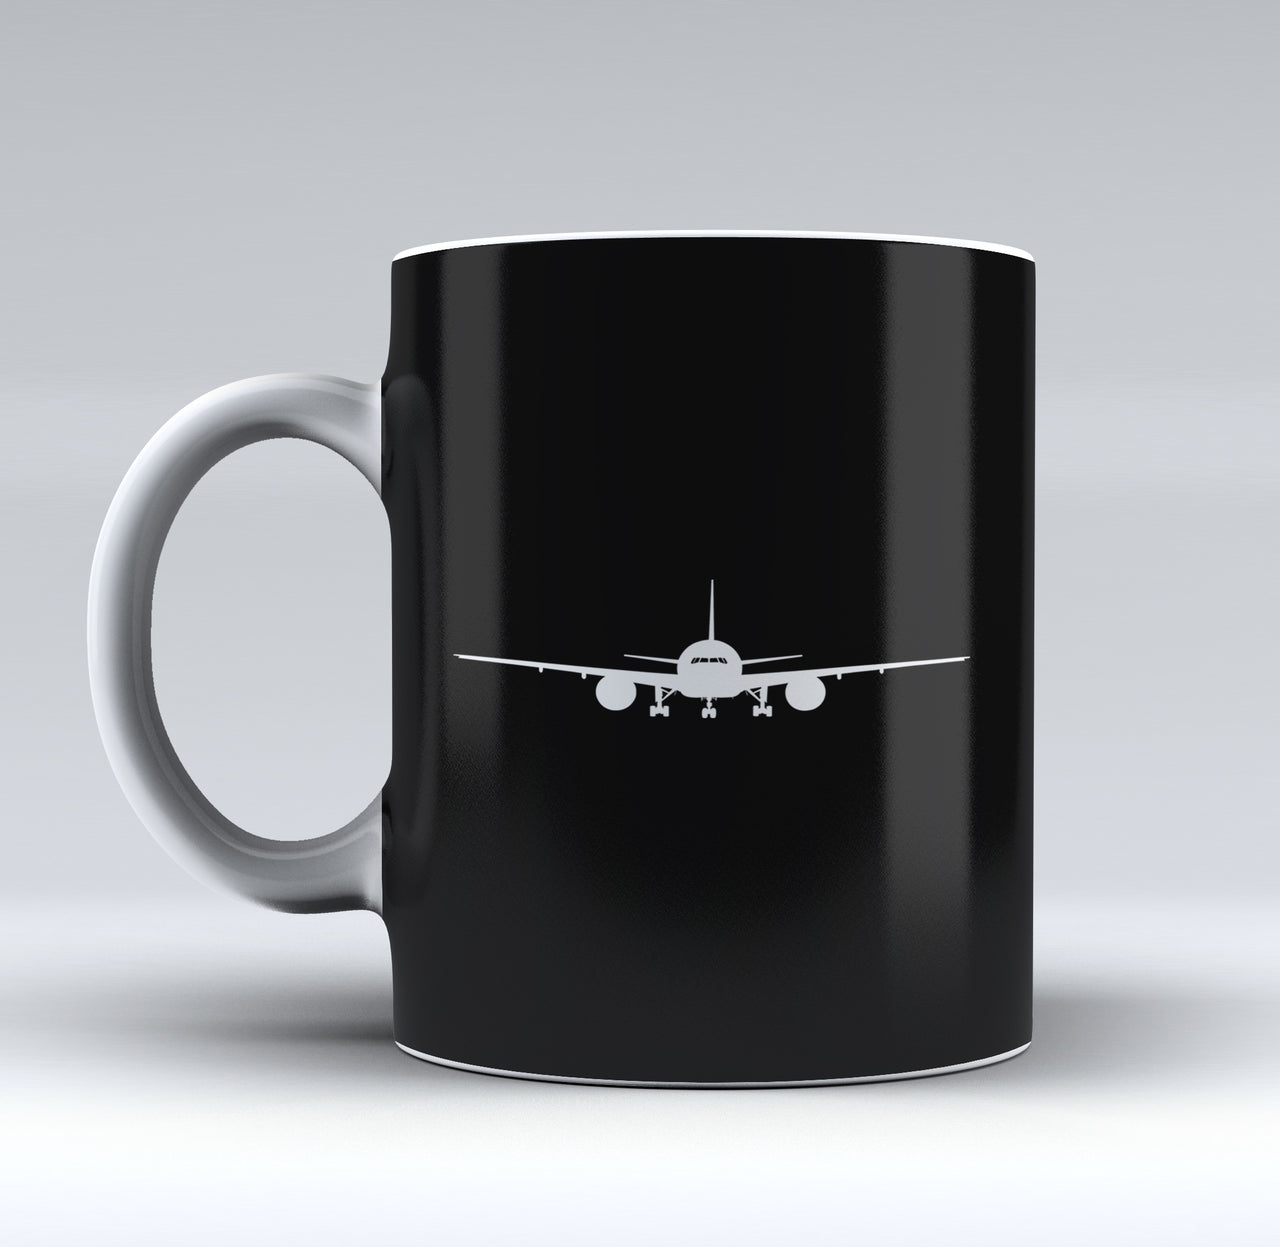 Boeing 777 Silhouette Designed Mugs